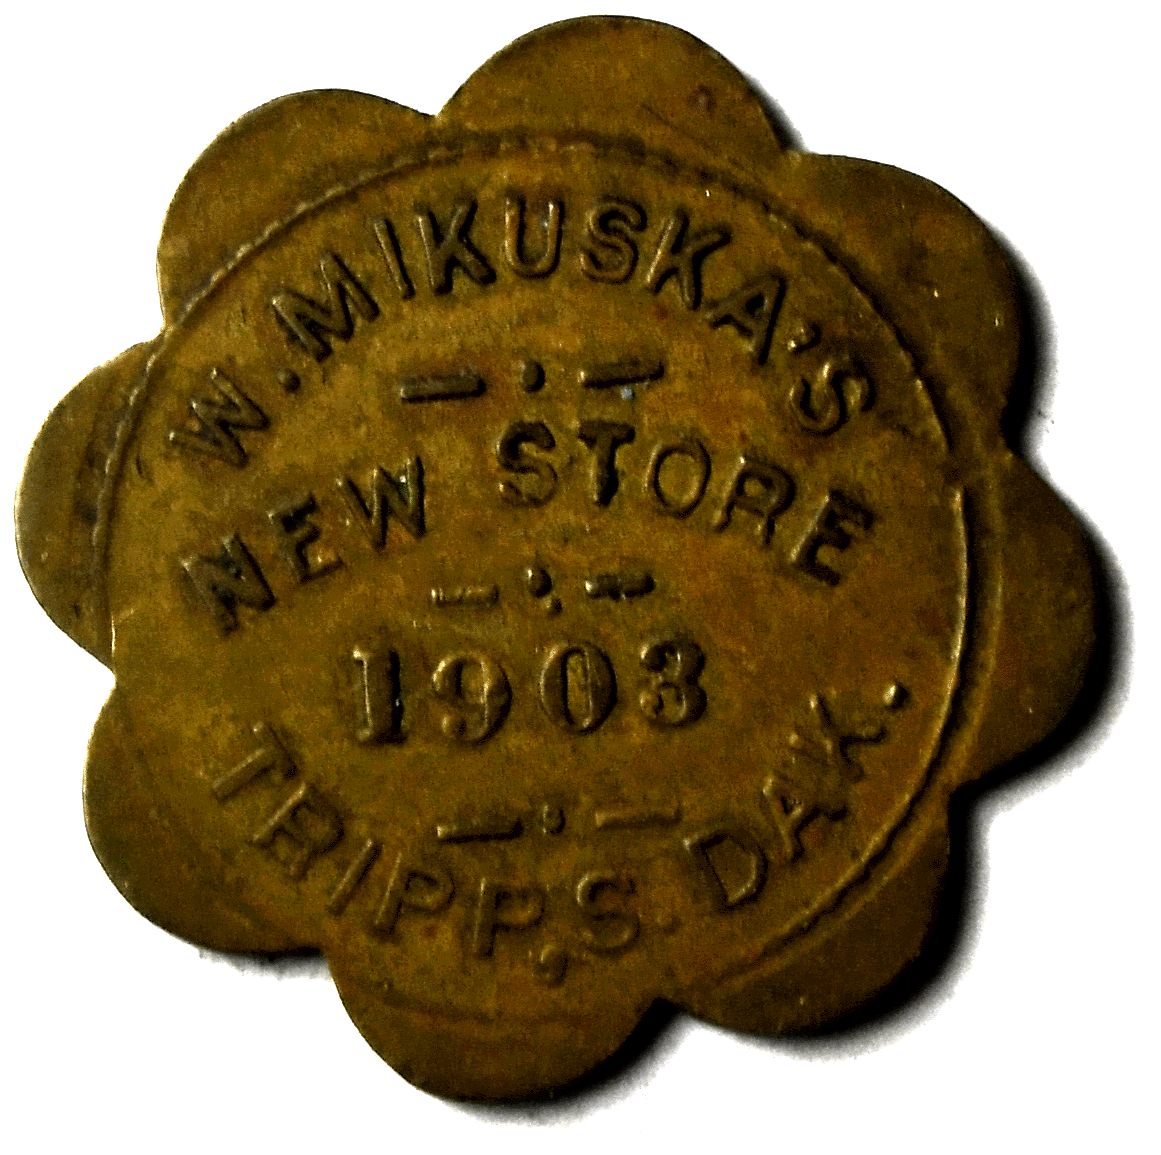 1903 Tripp South Dakota 1903 Mikuska's Store 50 Cents Trade Token 28mm